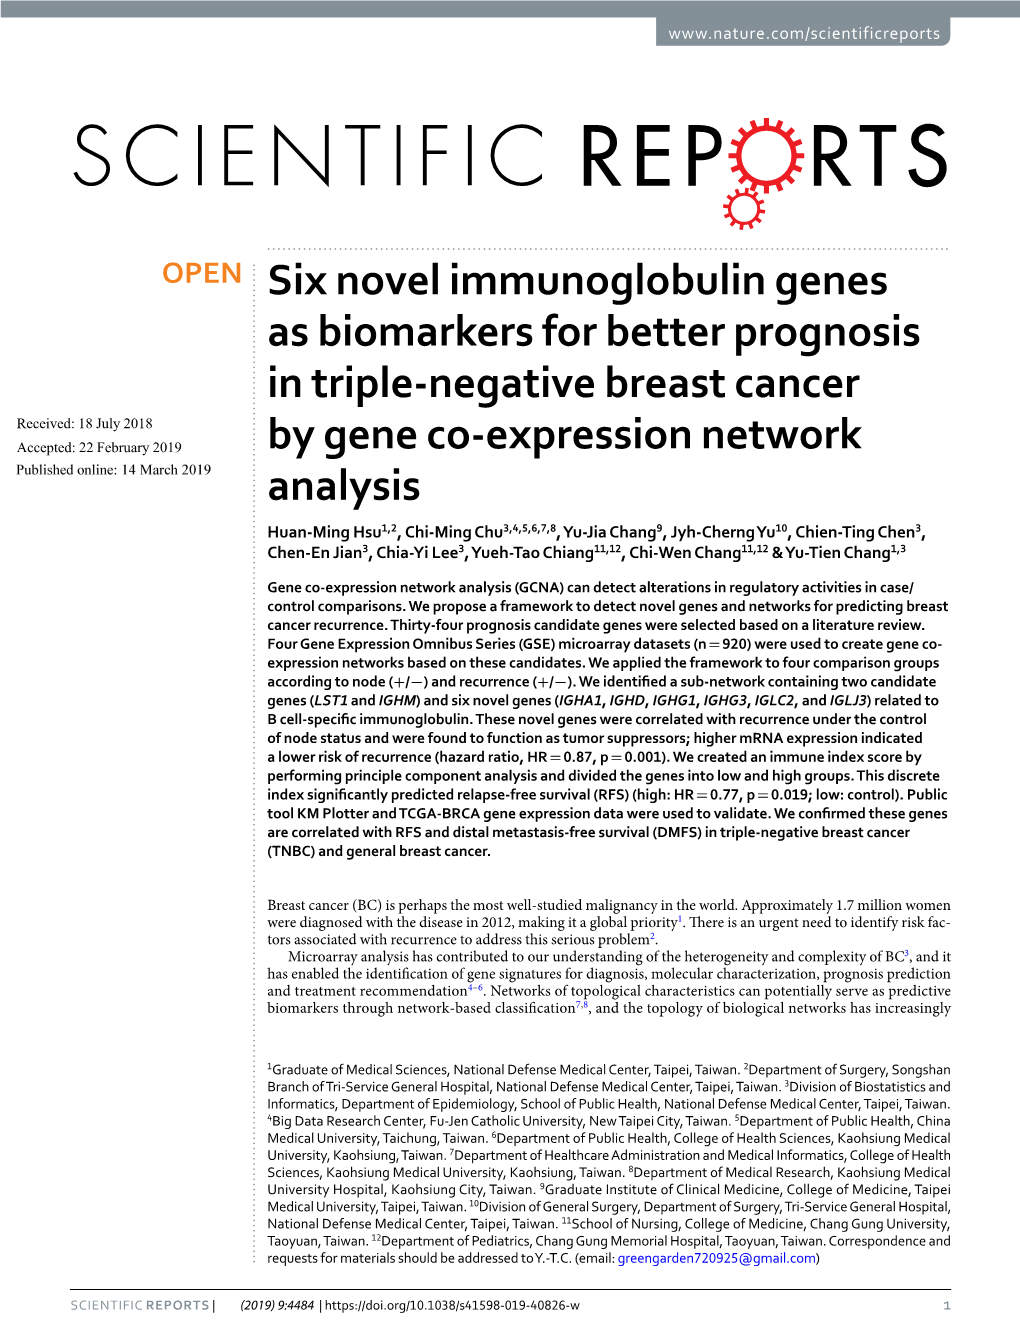 Six Novel Immunoglobulin Genes As Biomarkers for Better Prognosis In